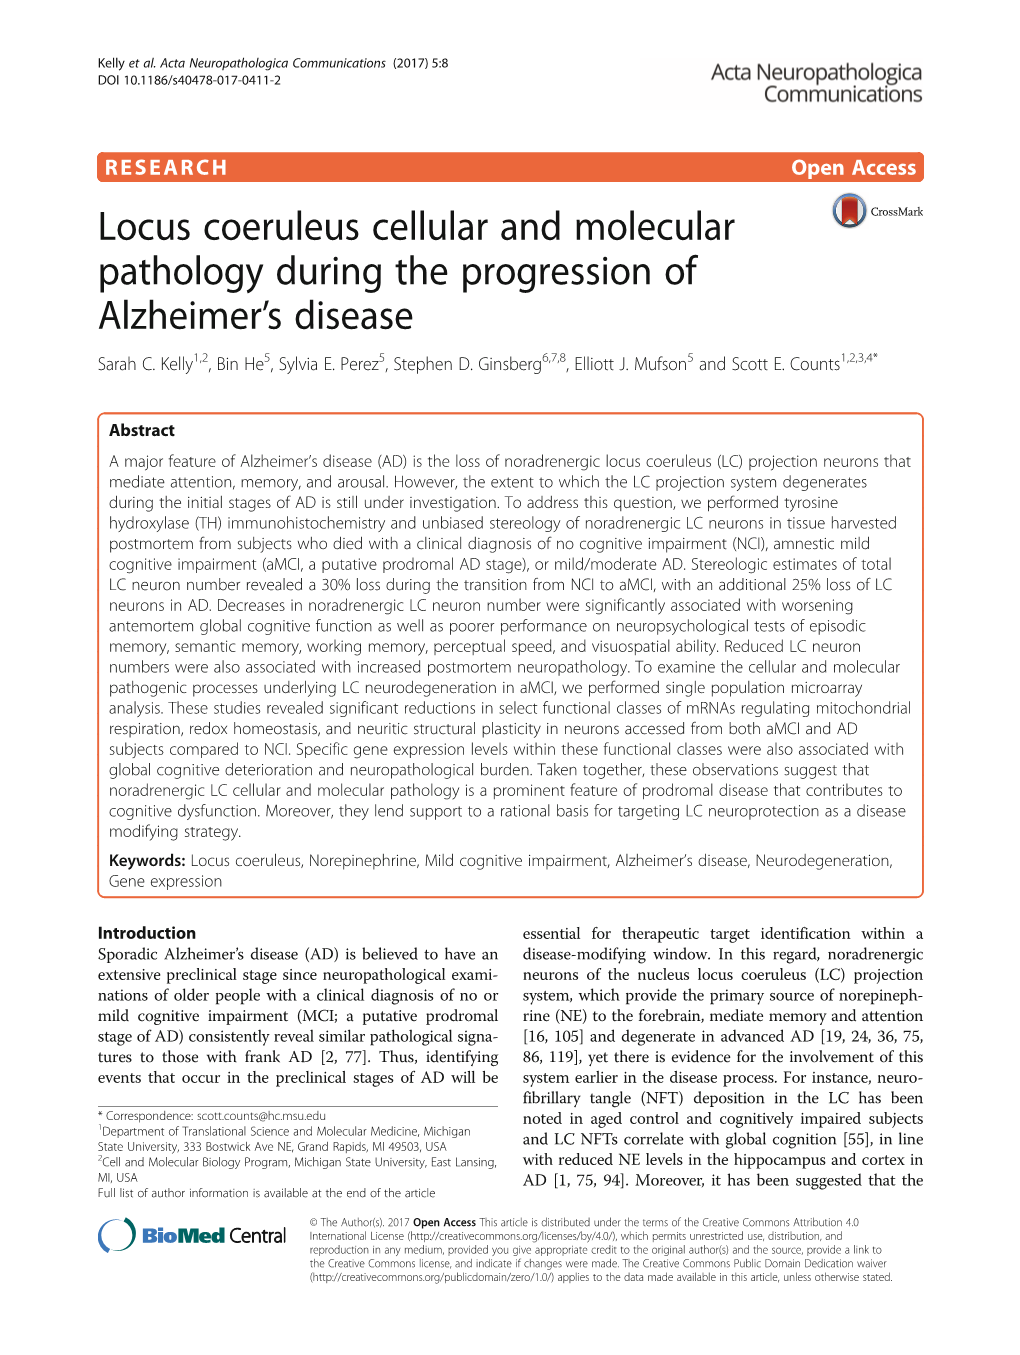 Locus Coeruleus Cellular and Molecular Pathology During the Progression of Alzheimer’S Disease Sarah C